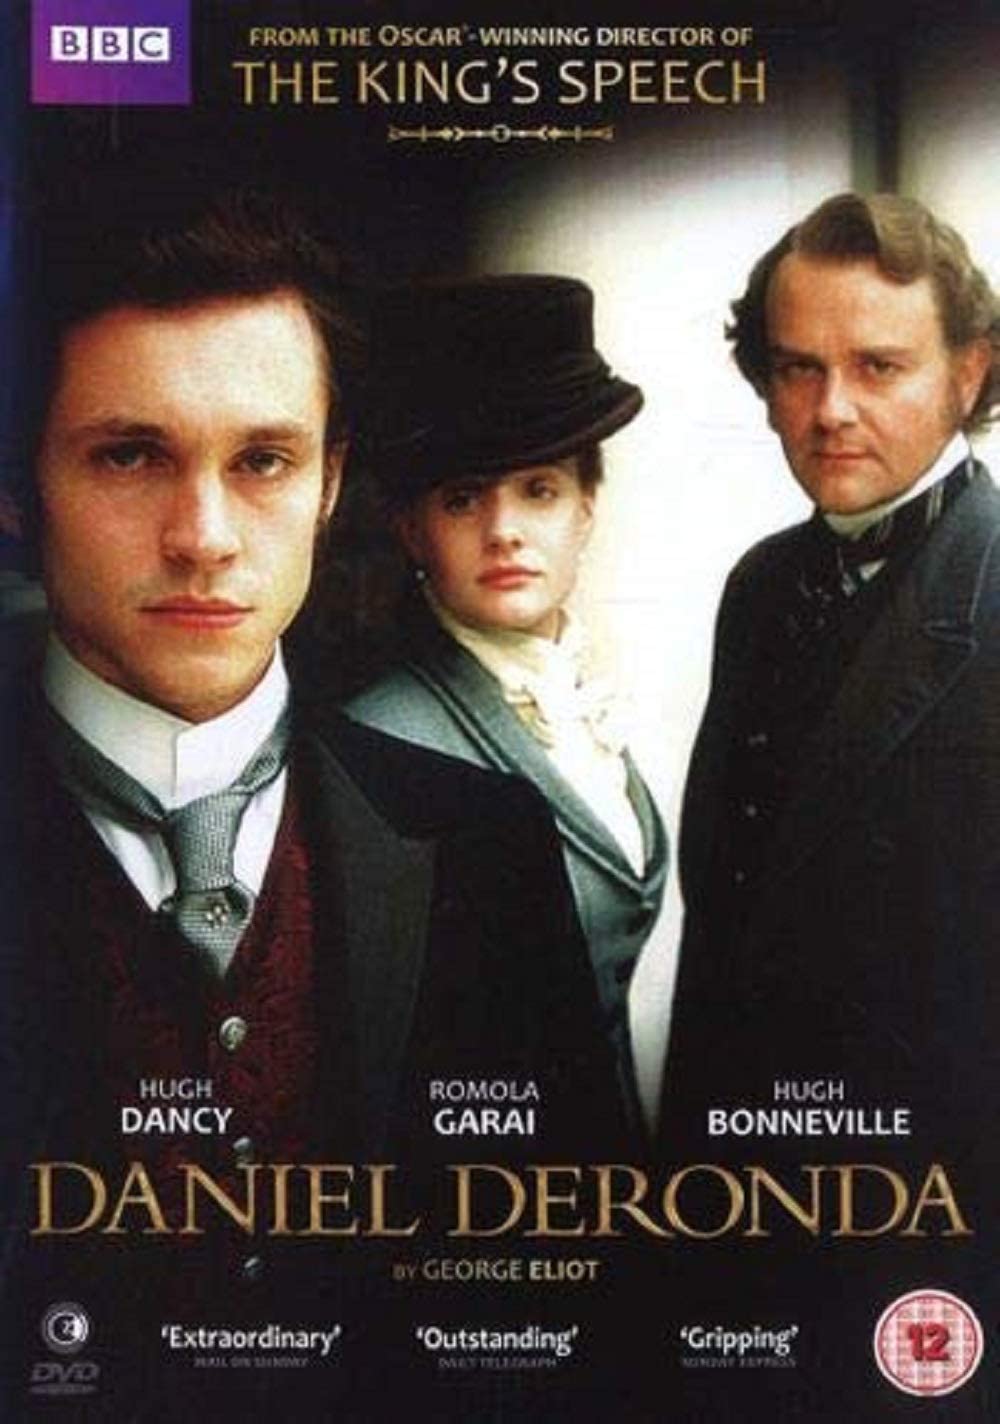 Daniel Deronda [2002] – Drama [DVD]